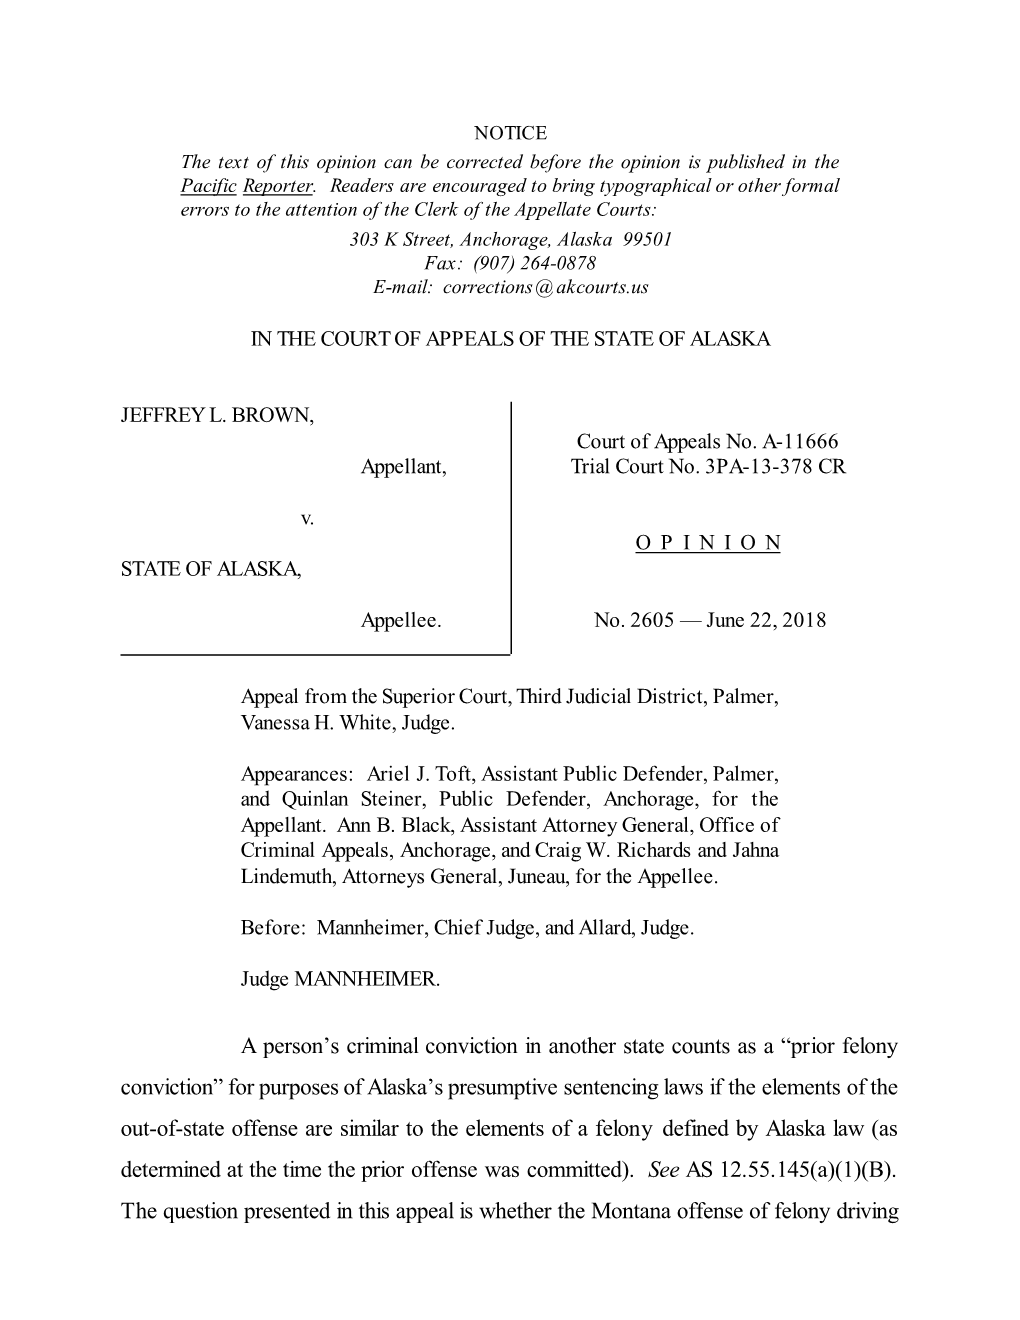 Alaska Court of Appeals Opinion No Ap-2605